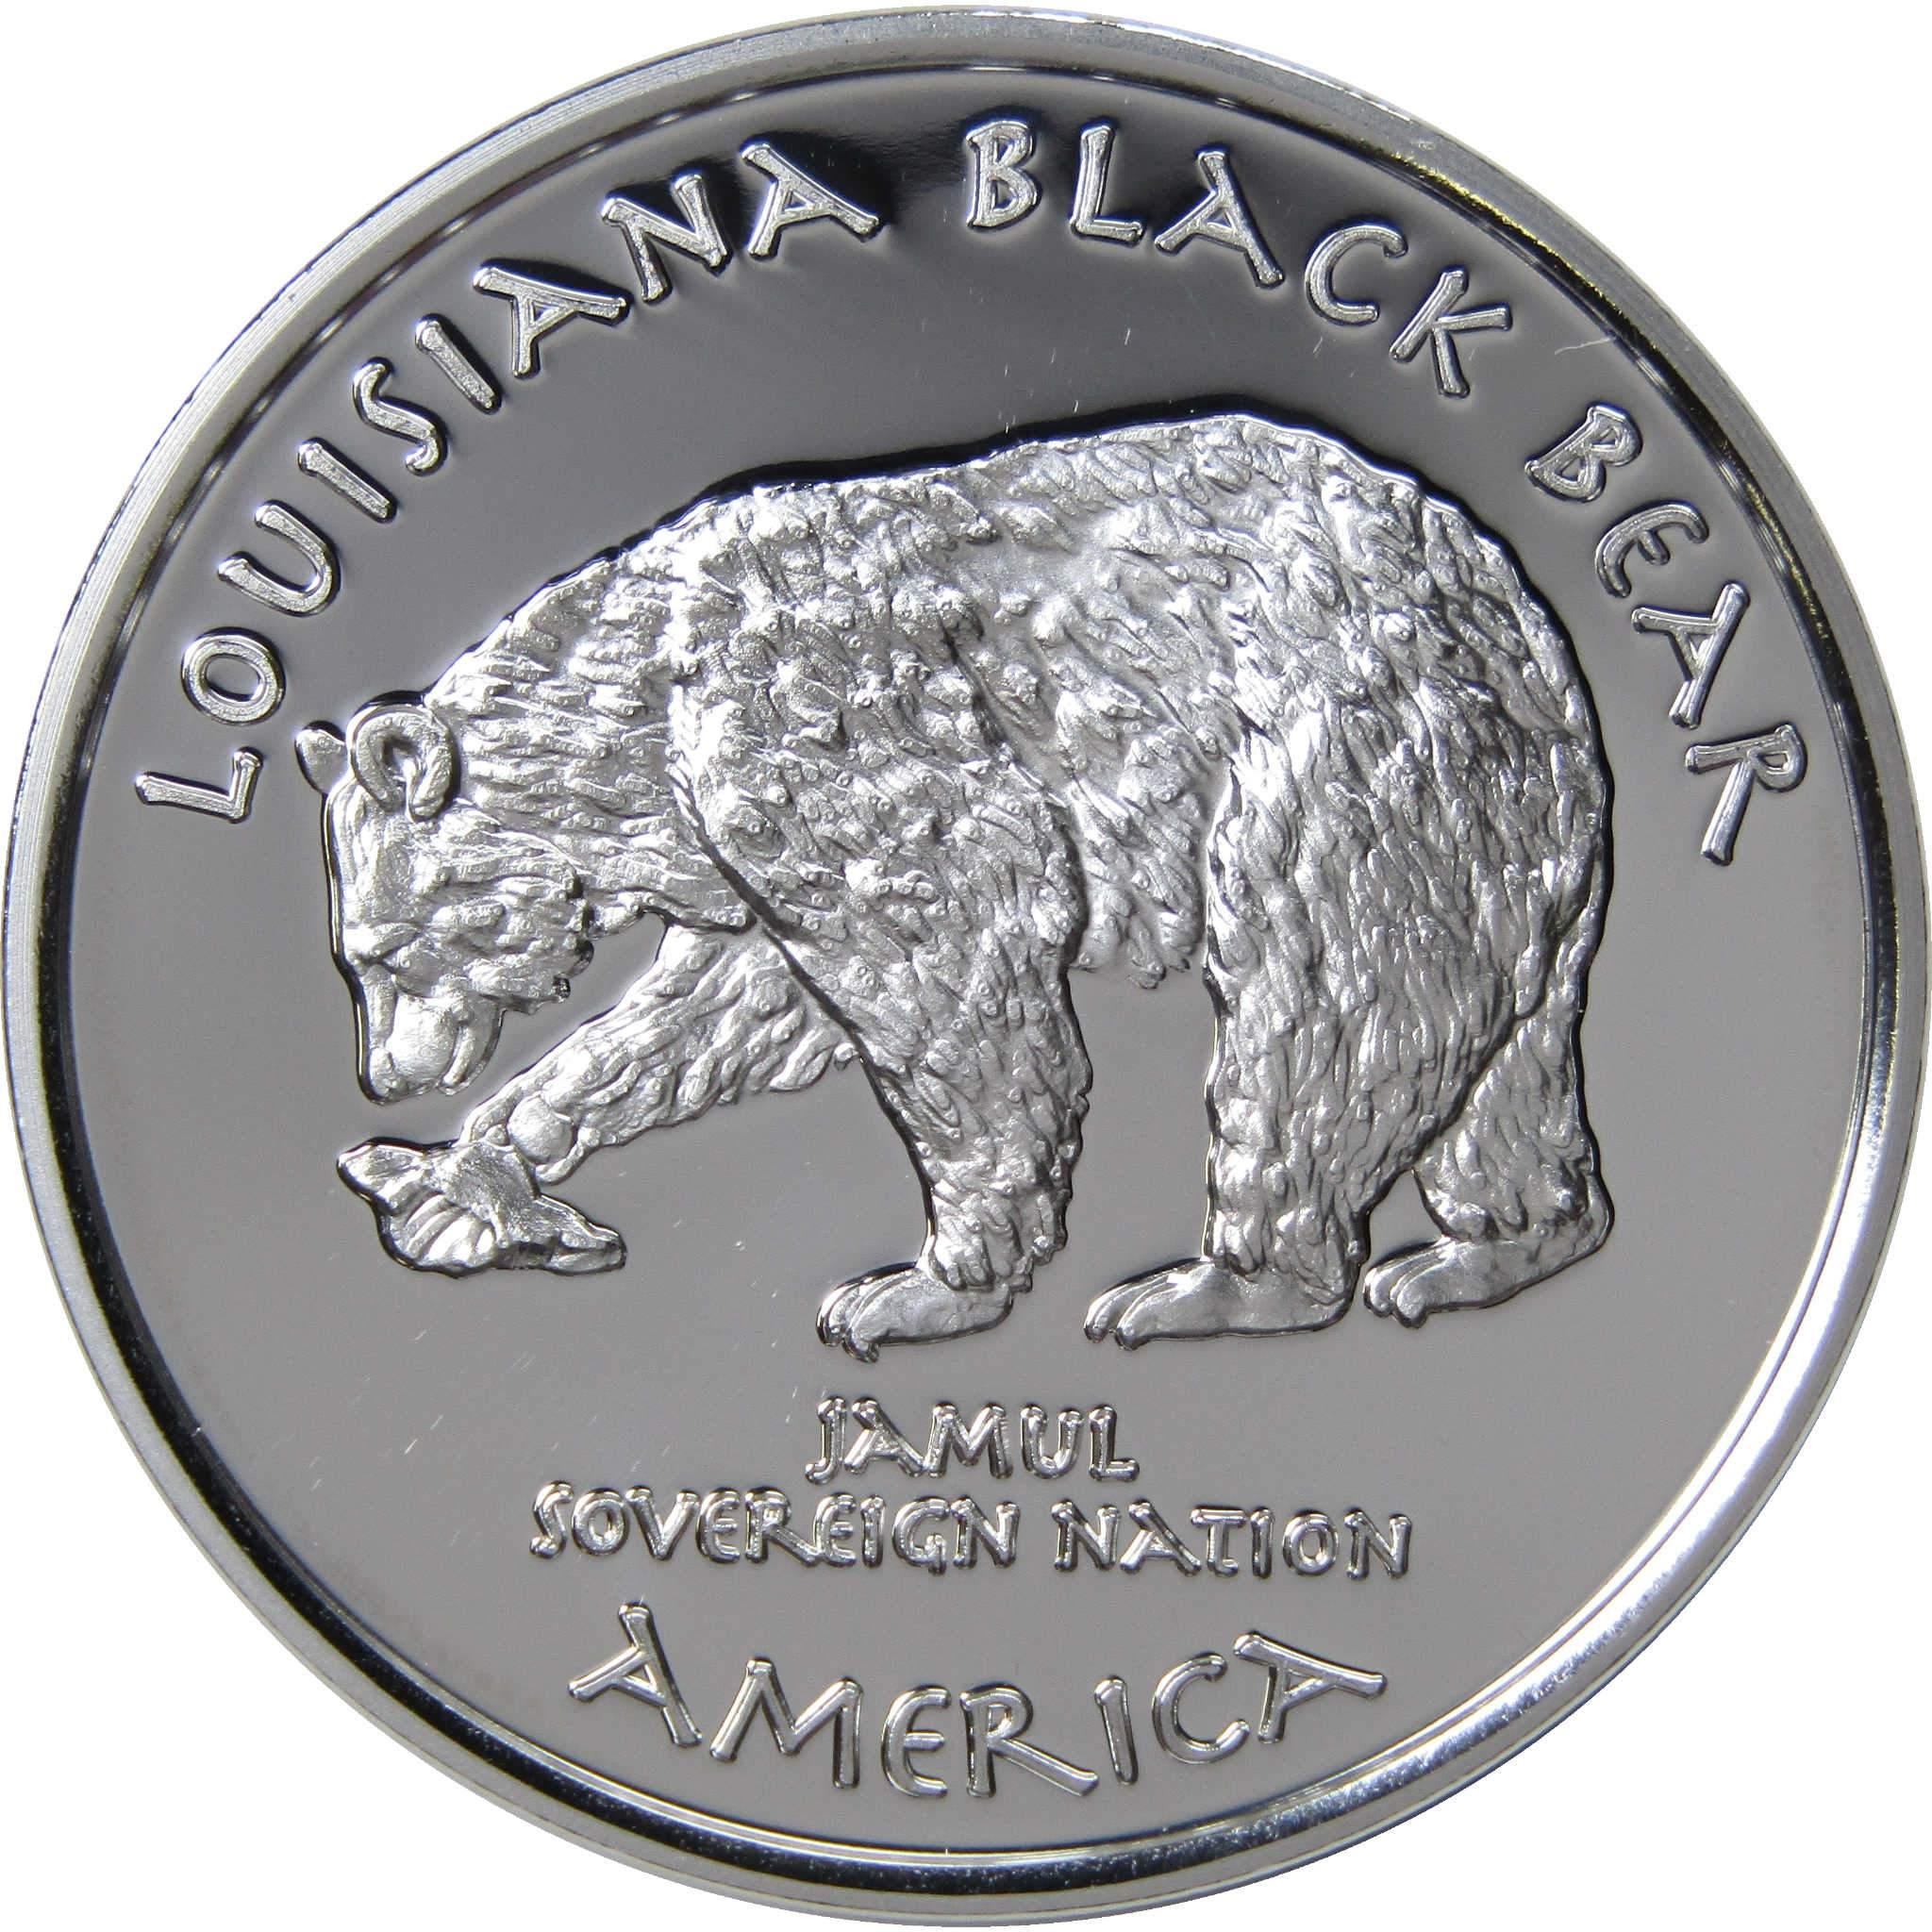 2017 Native American Jamul Natchez Black Bear 1 oz .999 Silver $1 Proof Coin